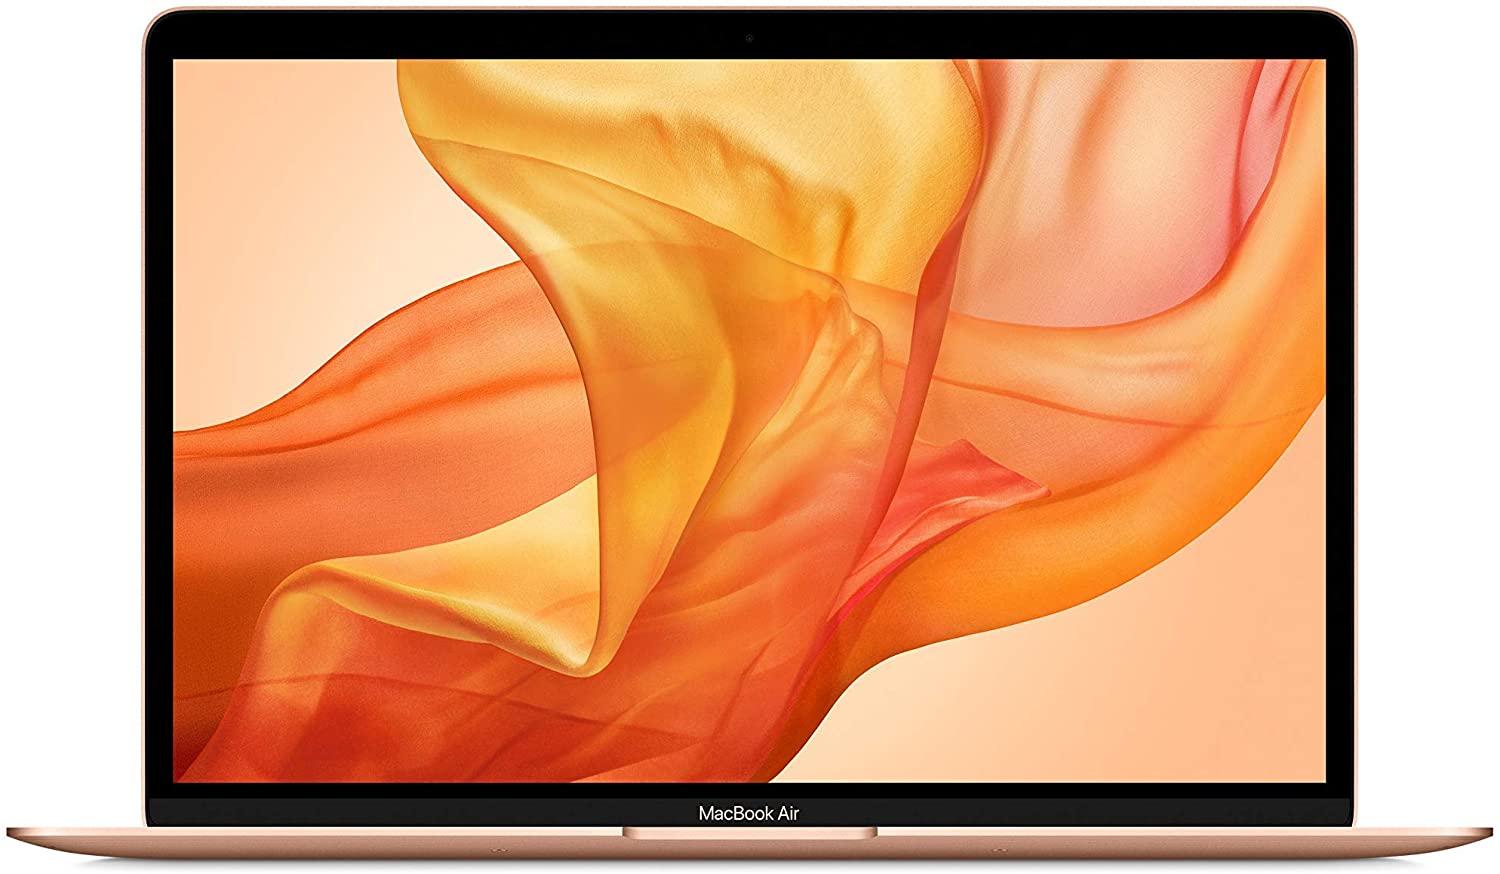 Restored Apple MacBook Air MWTJ2LL/A 13.3inch Intel Core i5 1.1GHz 8GB RAM 512GB SSD - Gold (Refurbished) - image 1 of 5